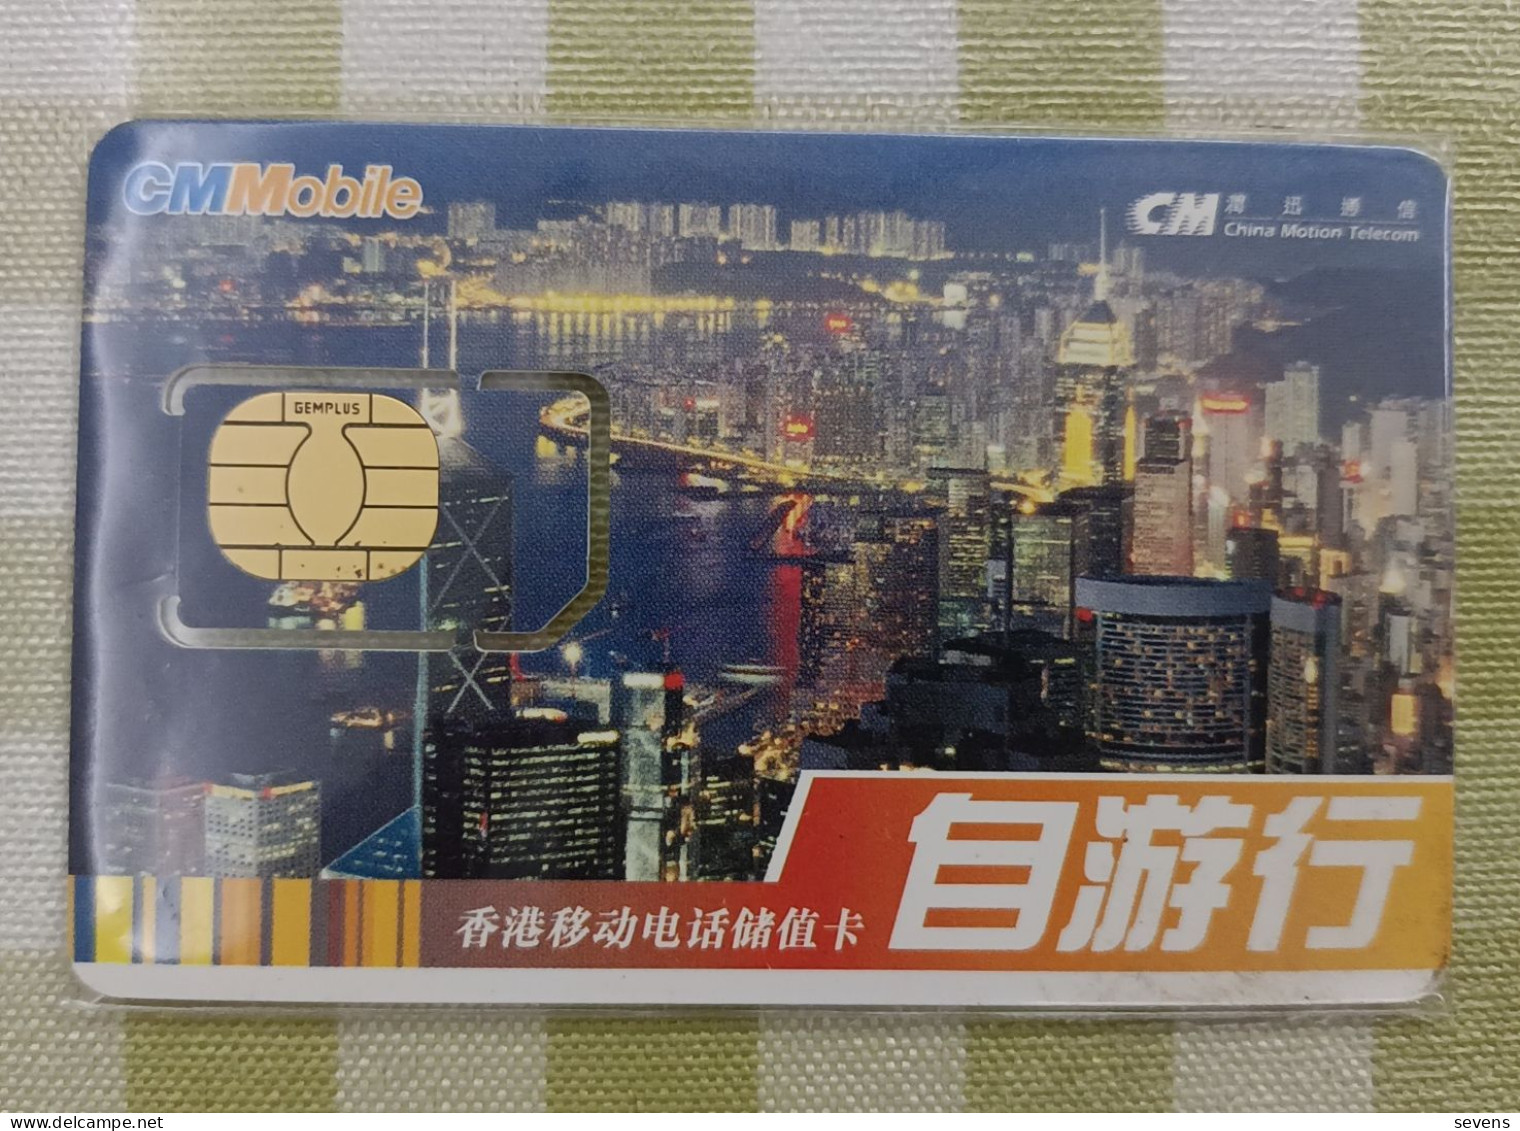 CM Bobile GSM SIM Card, For Tourist, Night View, Fixed Chip - Hong Kong